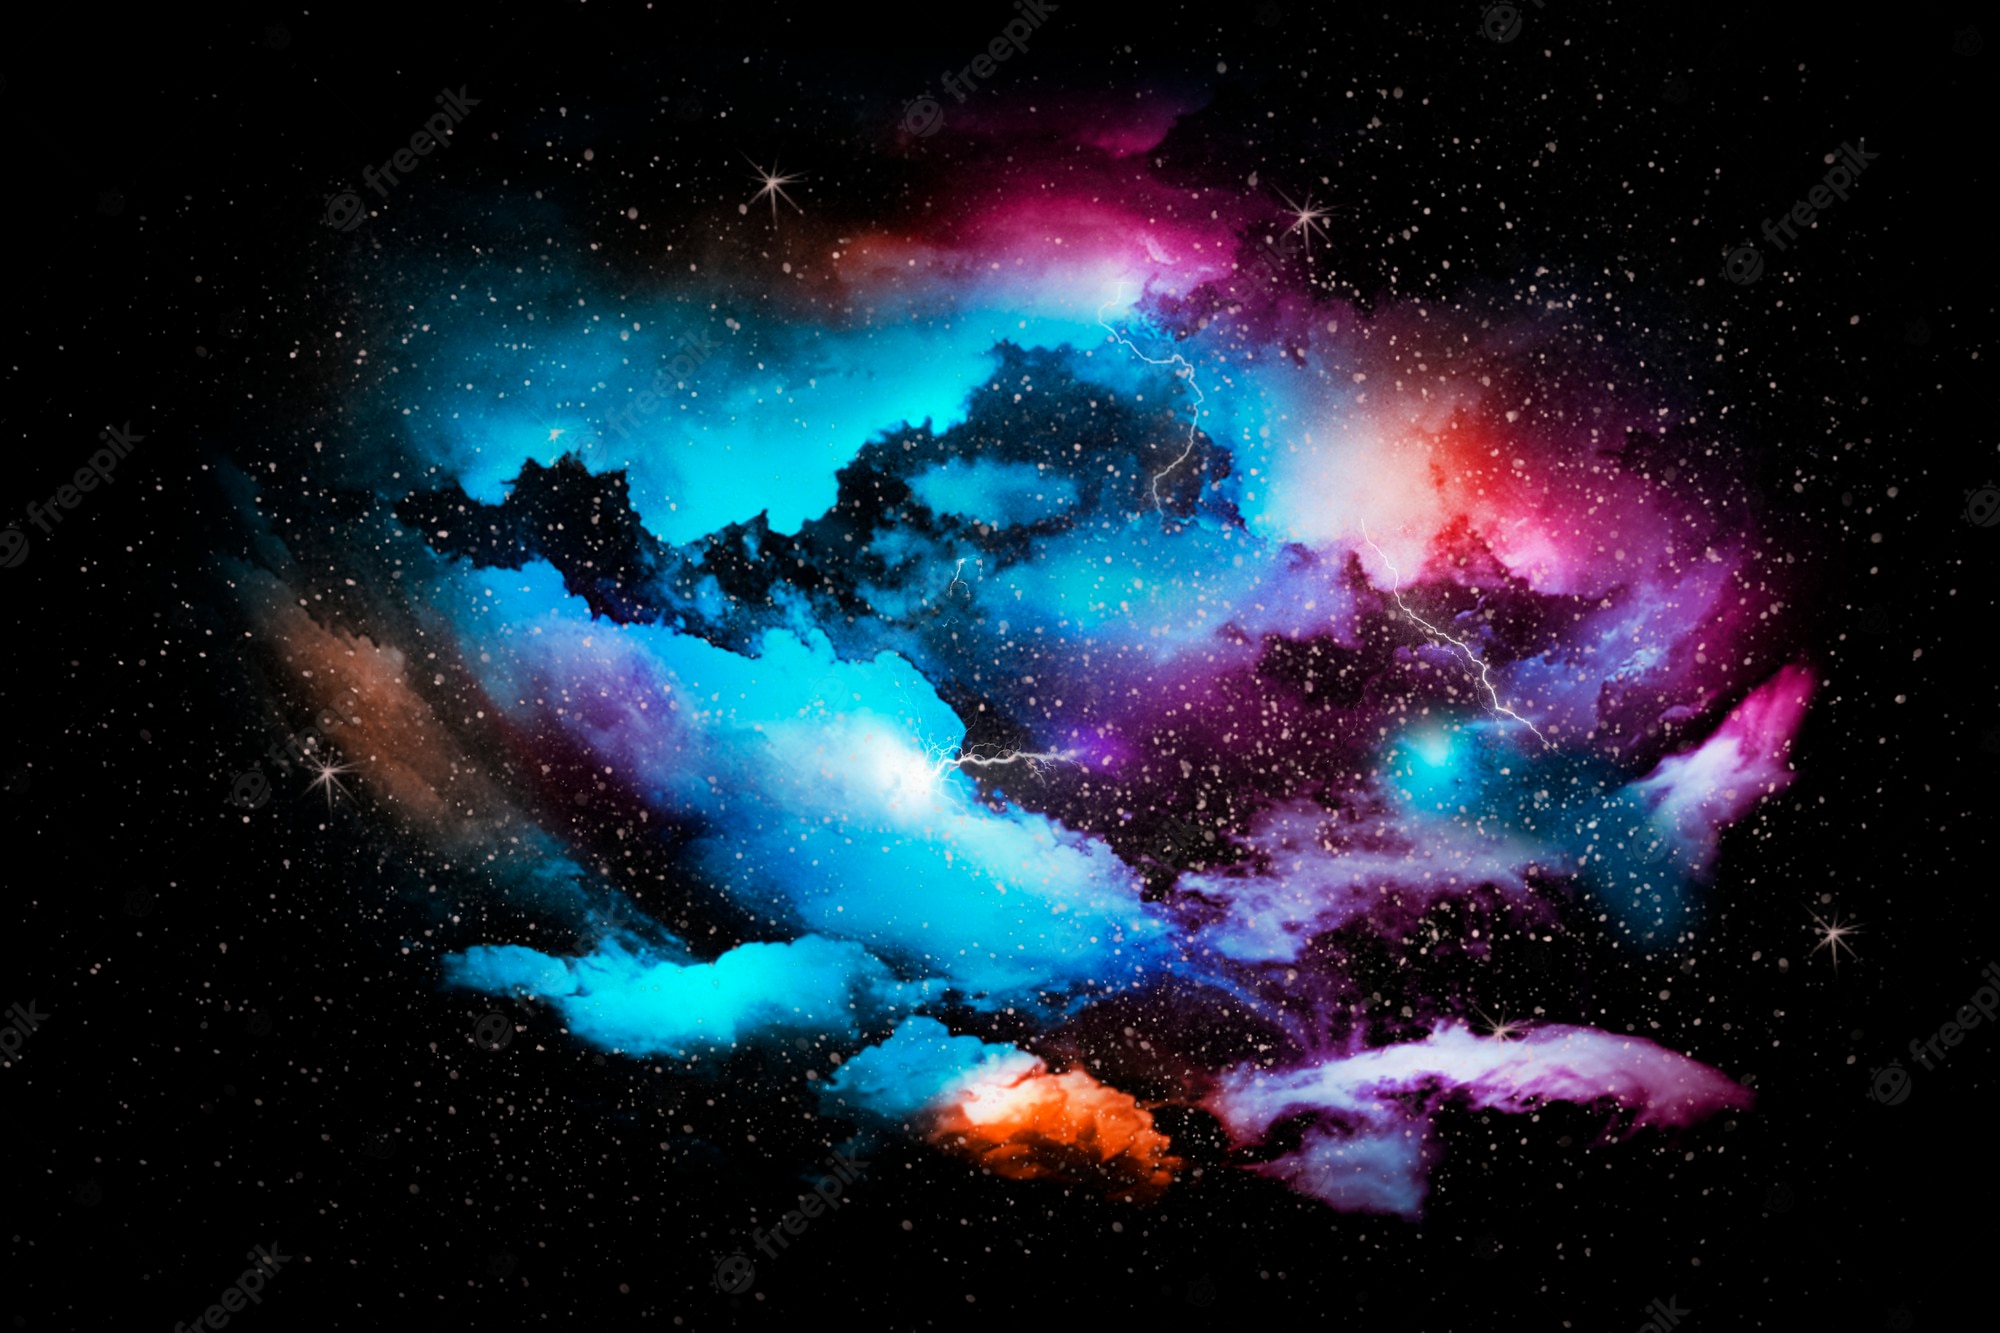 Galaxy Image